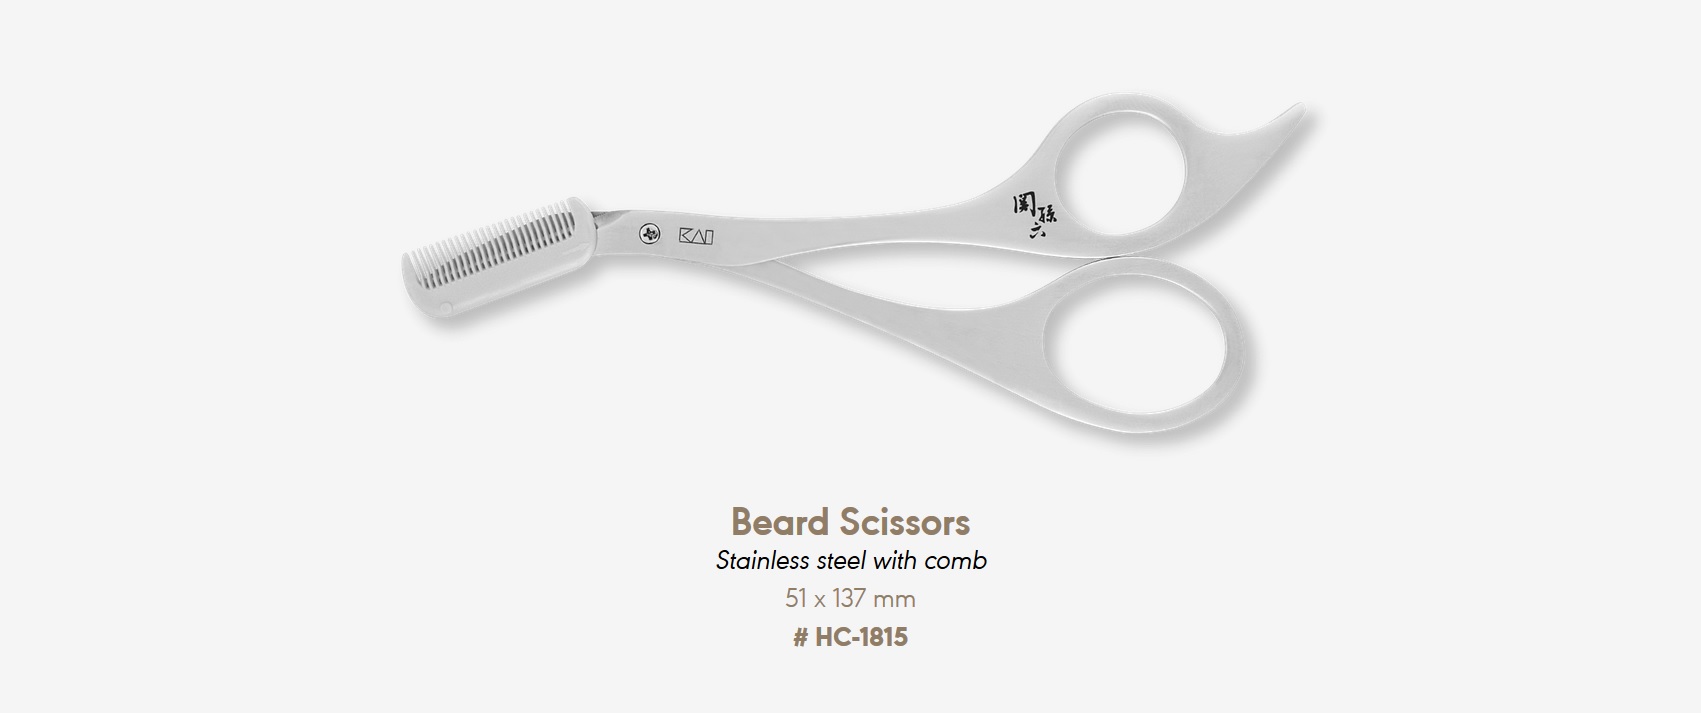 kai beard scissor